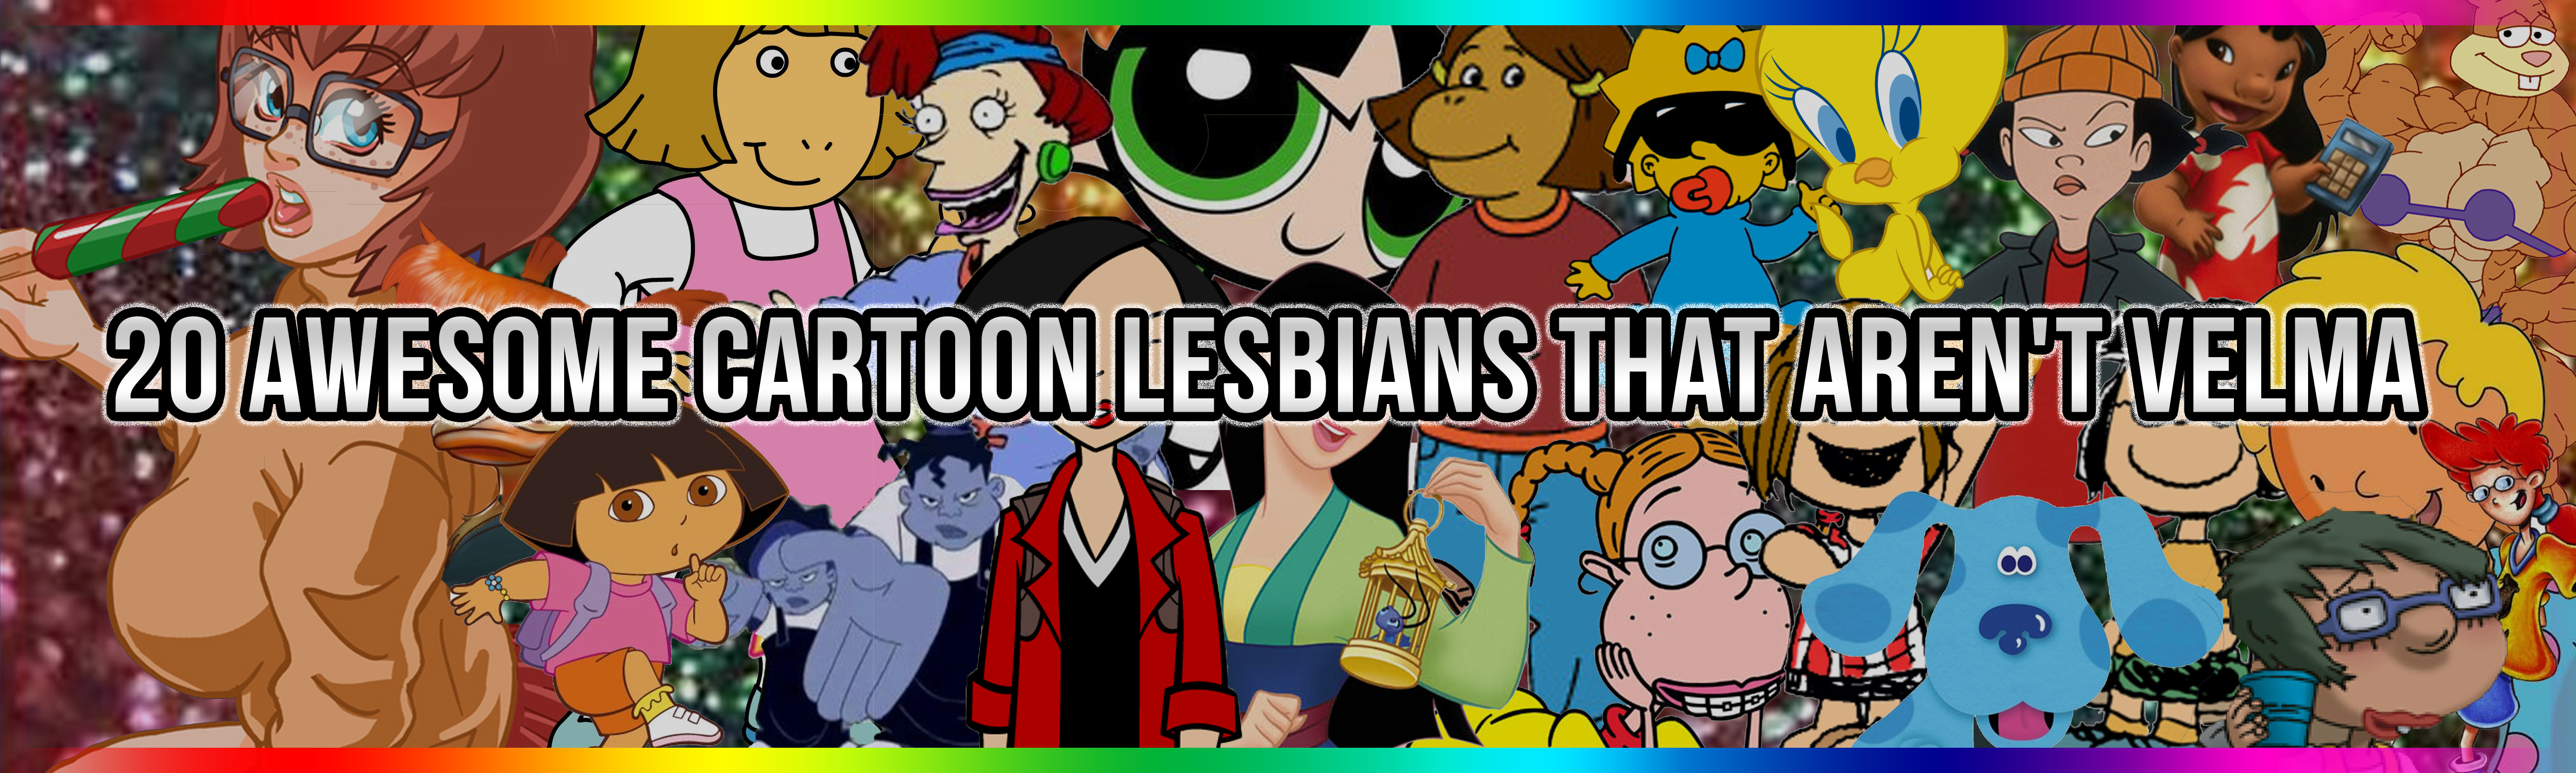 best of Lesbian cartoons Disney